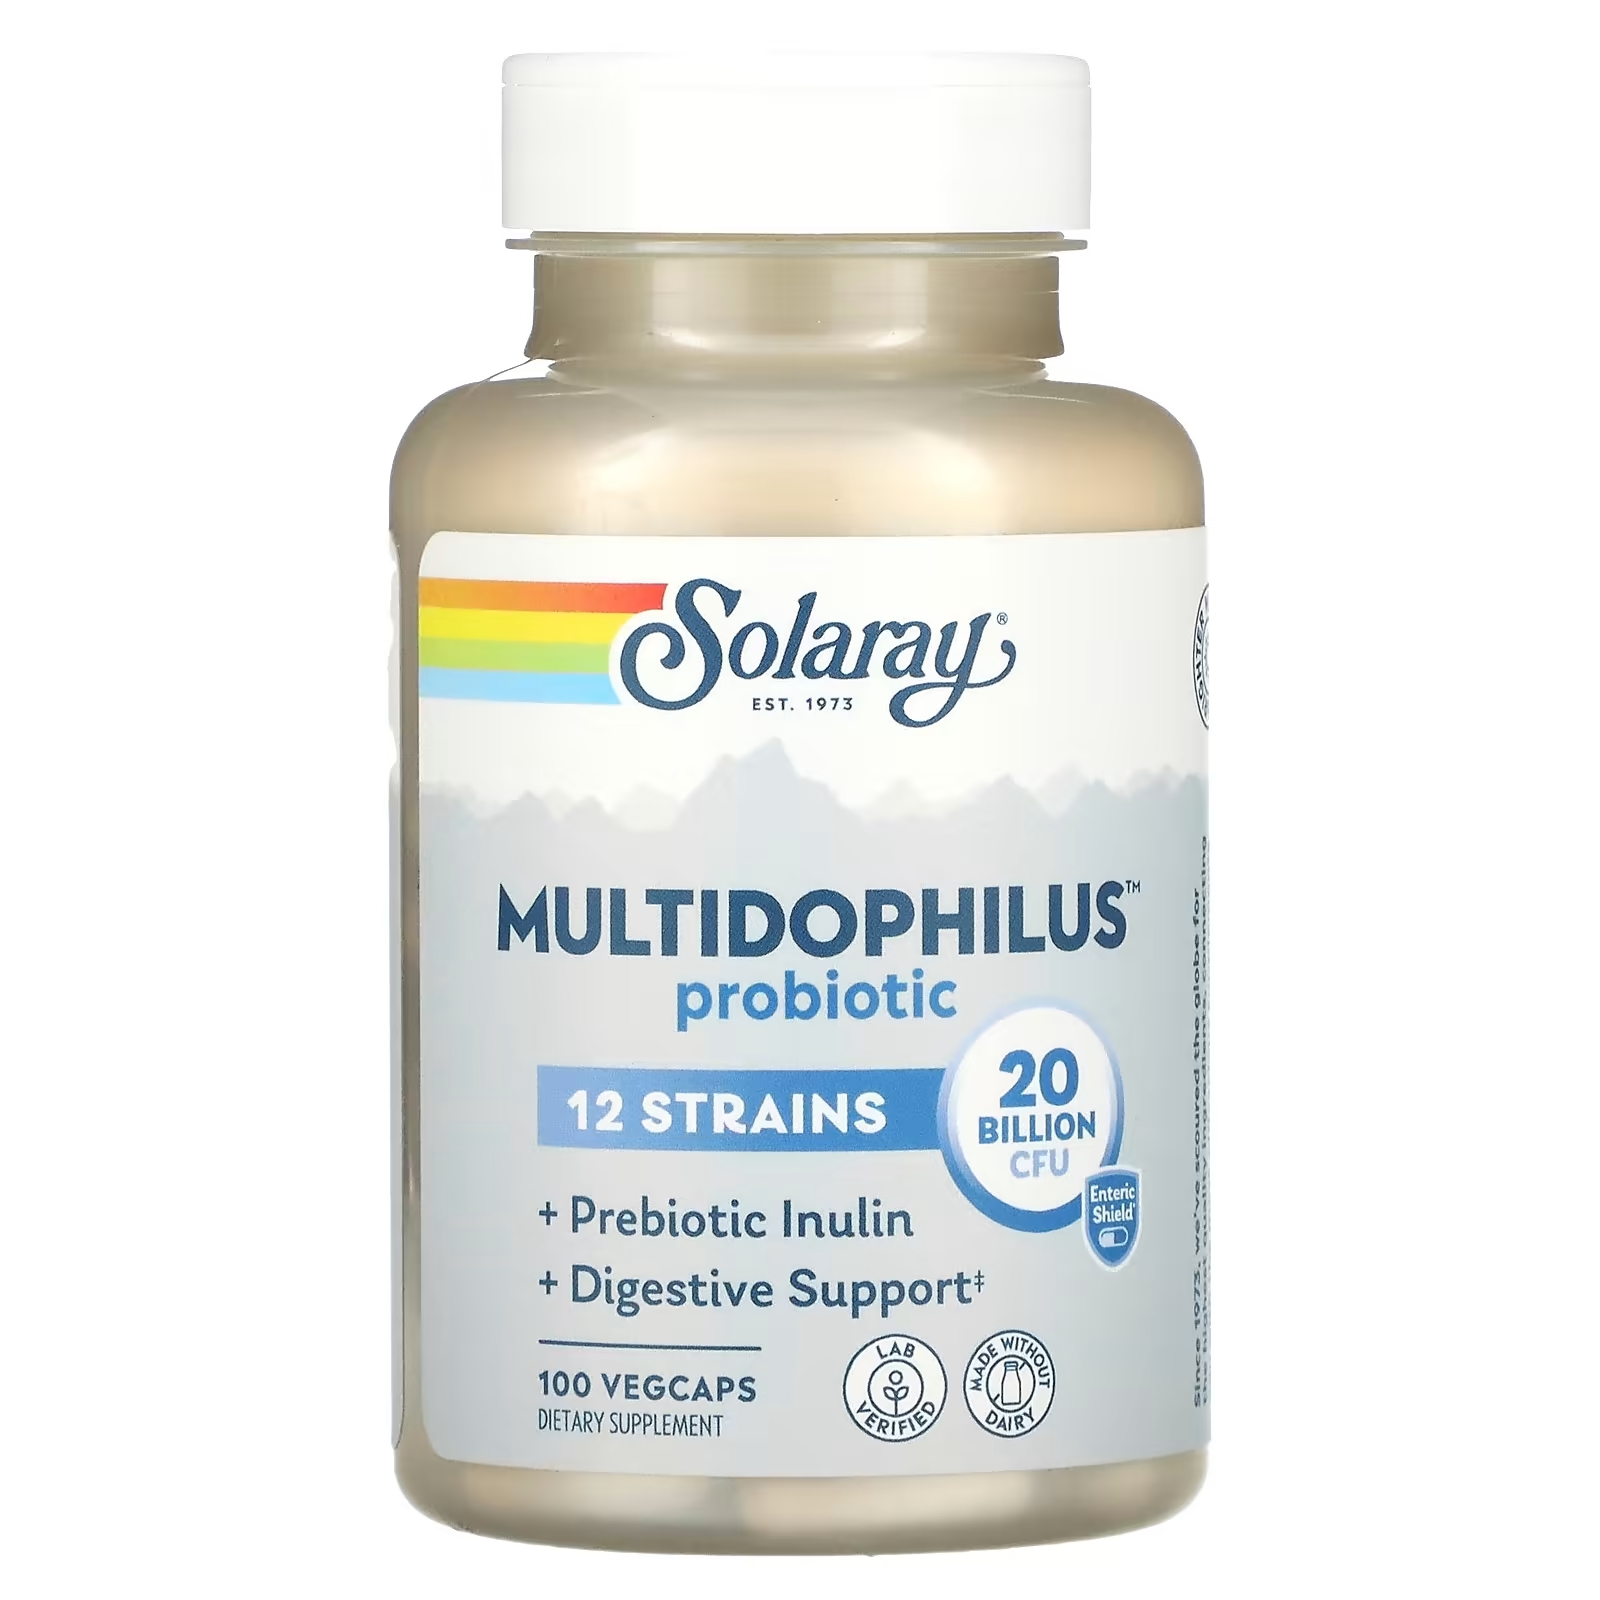 solaray super multidophilus 30 миллиардов кое 60 вегетарианских капсул с покрытием Solaray Multidophilus Probiotic пробиотик 20 млрд КОЕ, 100 вегетарианских капсул VegCaps